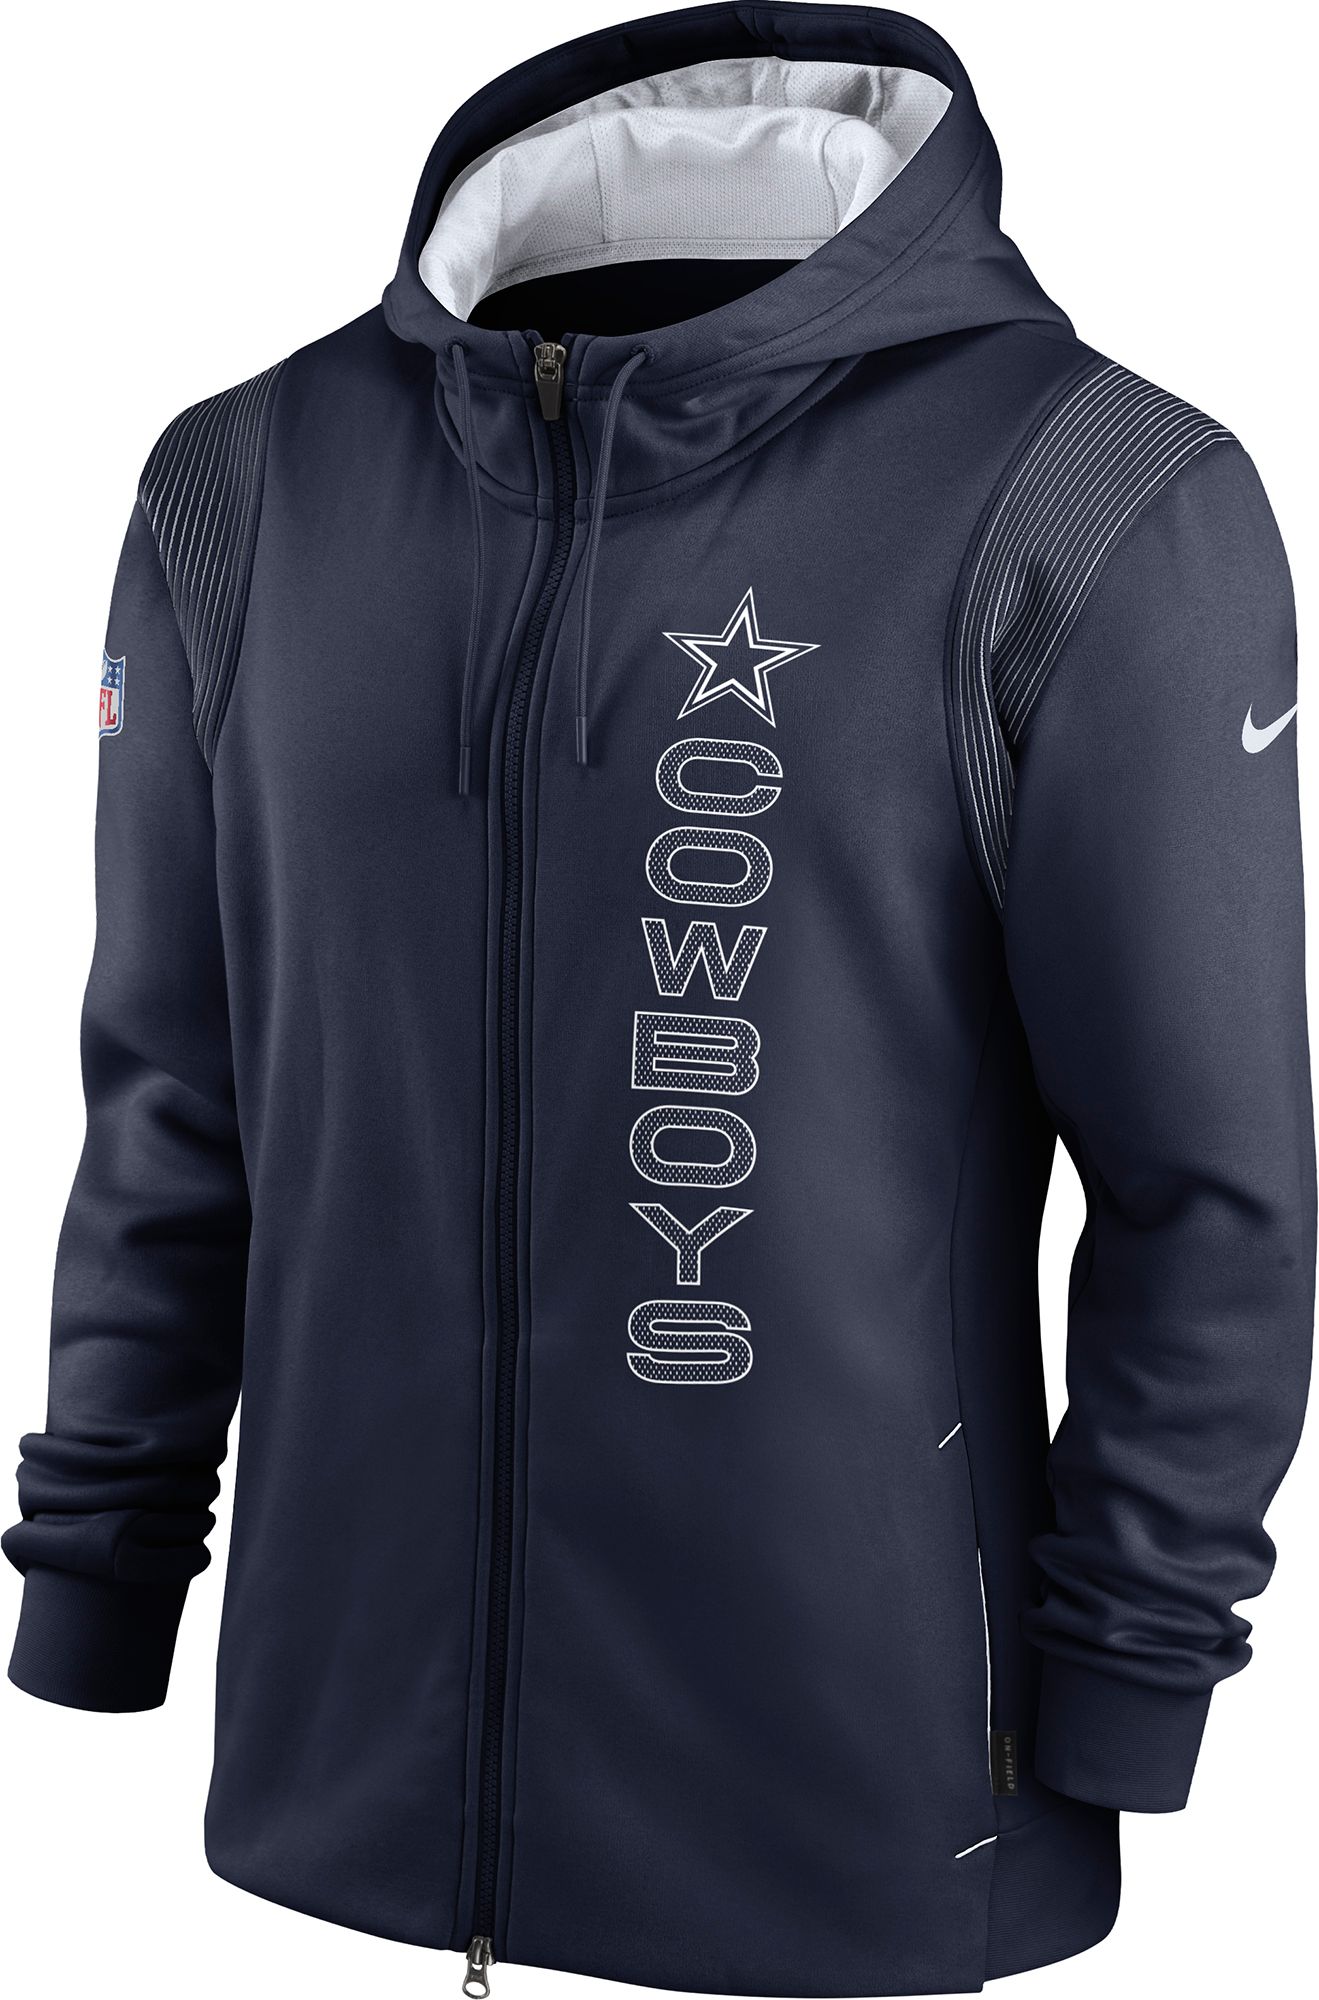 Nike / Men's Dallas Cowboys Sideline Therma-FIT Full-Zip Navy